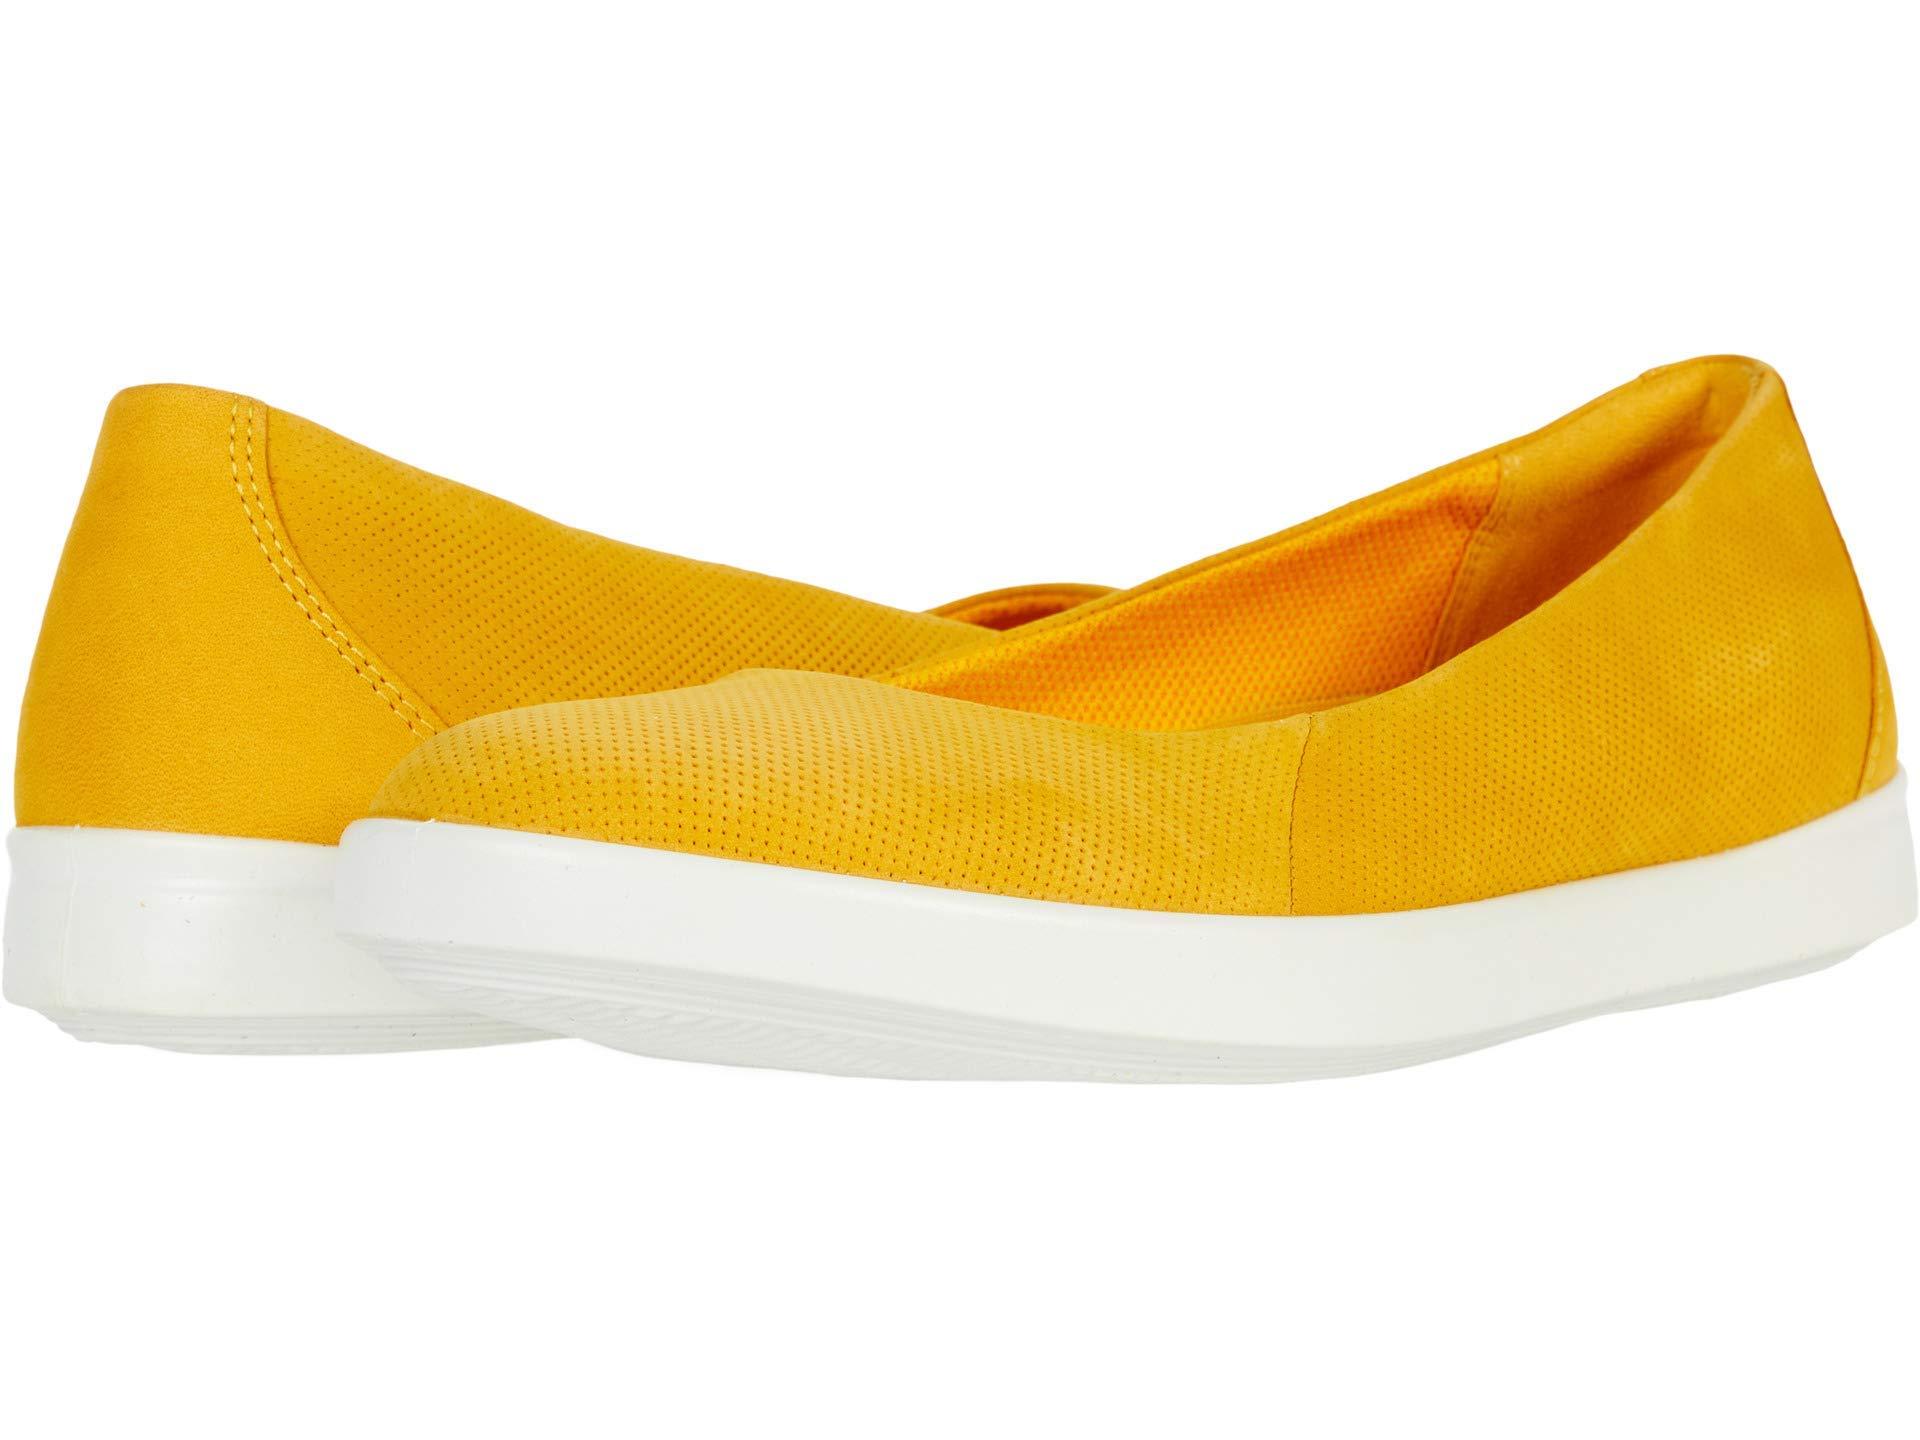 Ecco Leather Women's Barentz Ballerina Slip On Loafer in Yellow - Save 28%  | Lyst